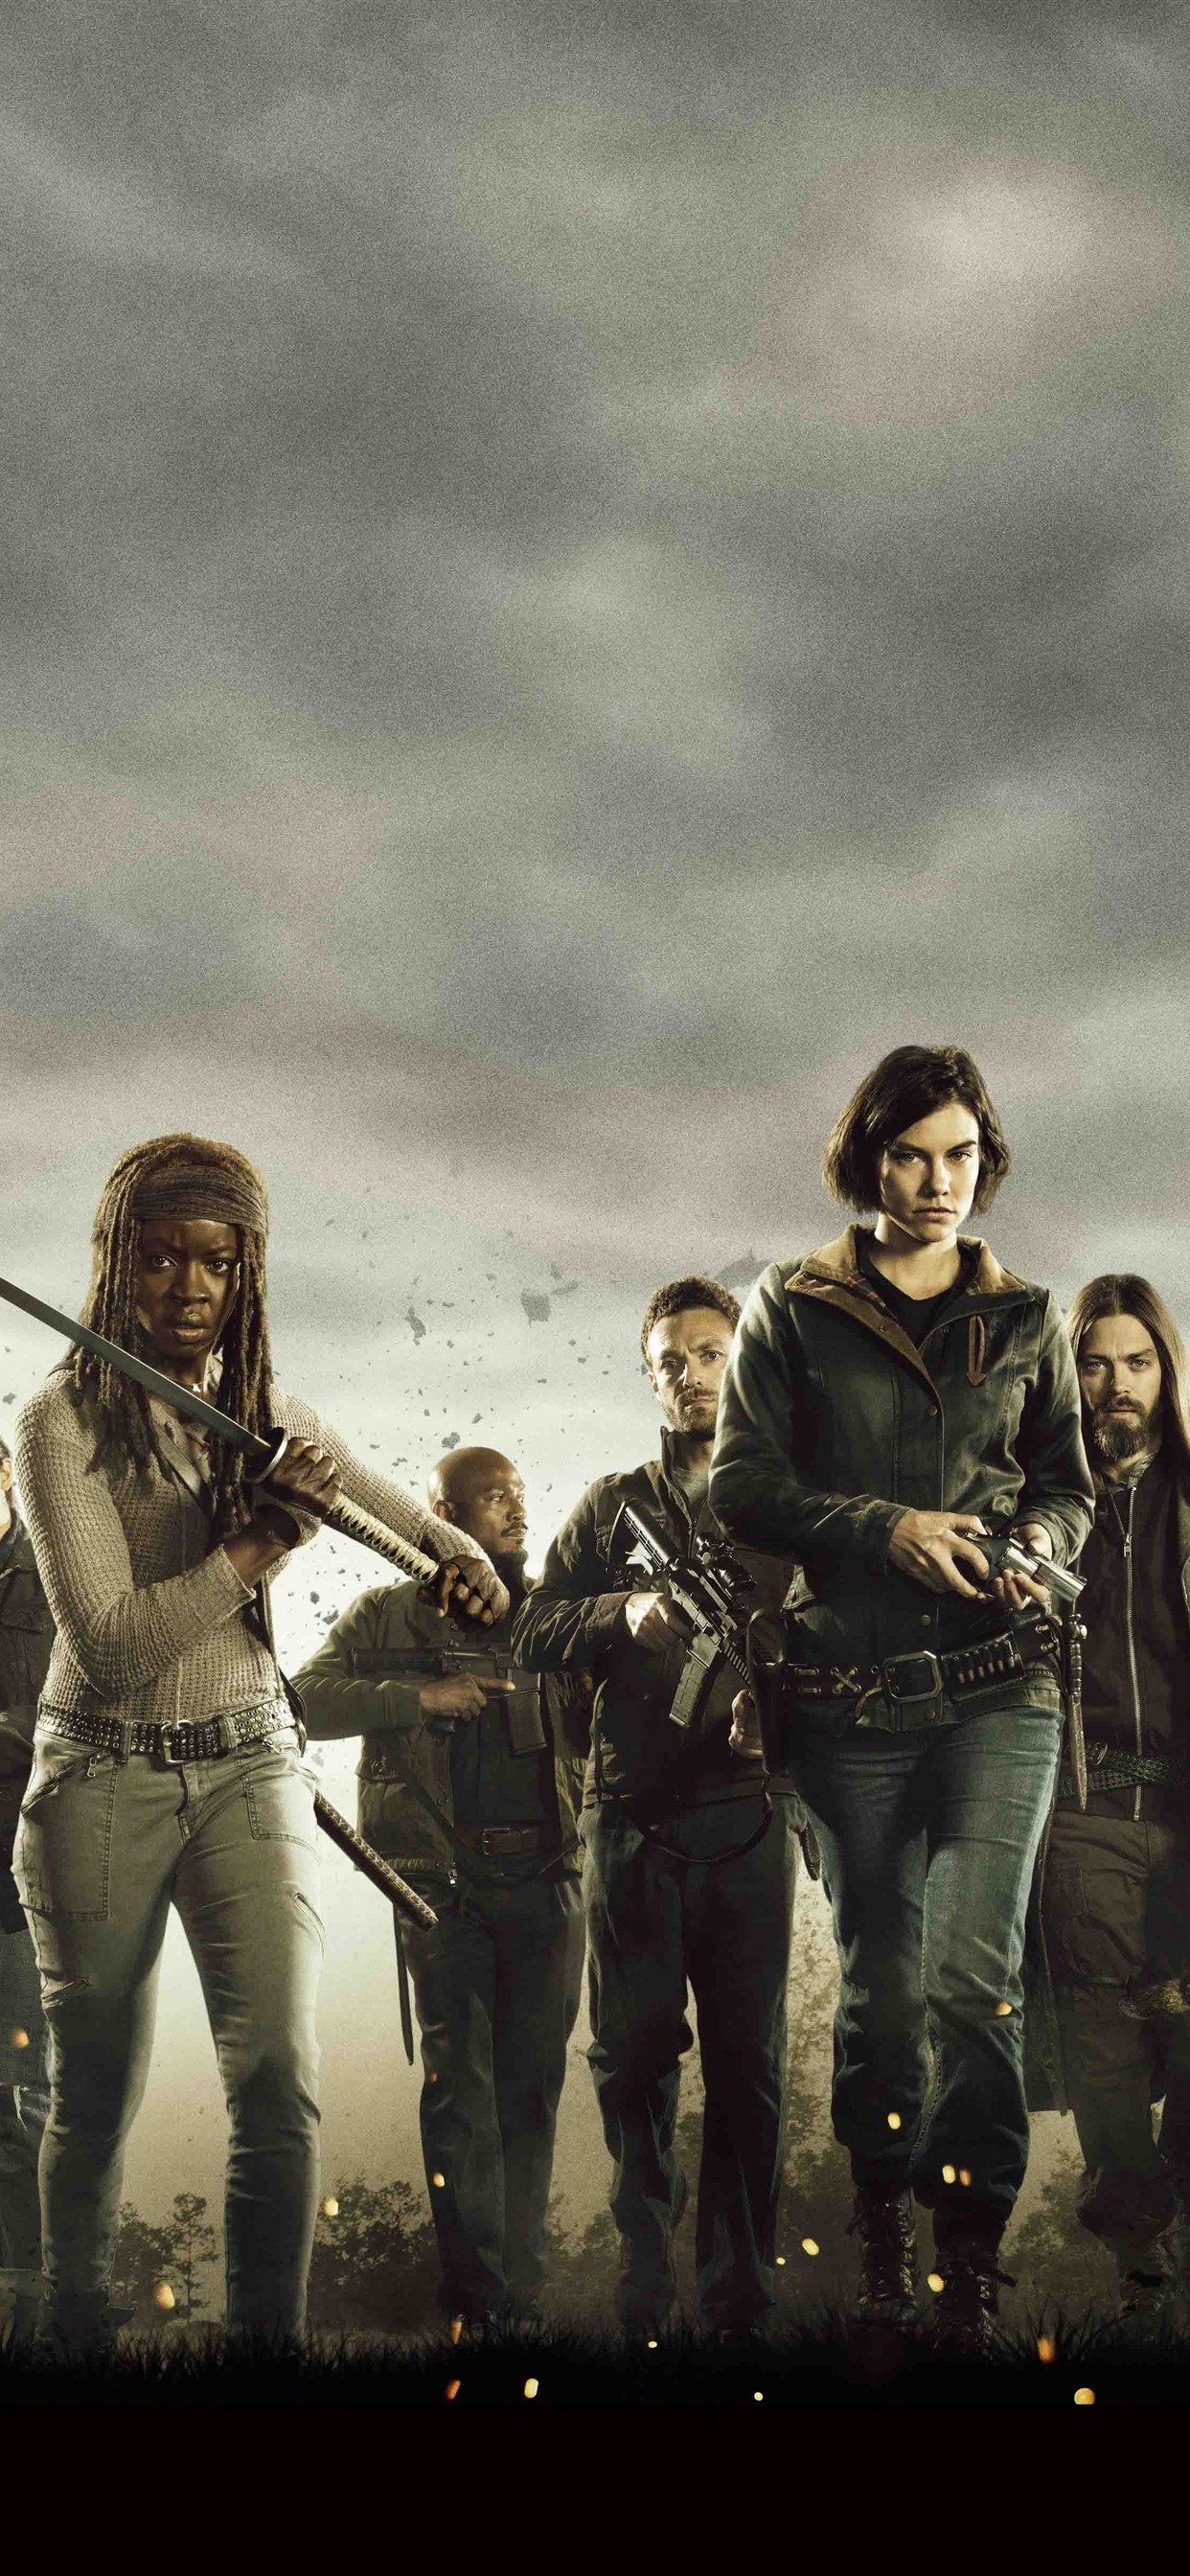 iPhone Wallpaper The Walking Dead, Amc Tv Series Dead Season 8 Part 2